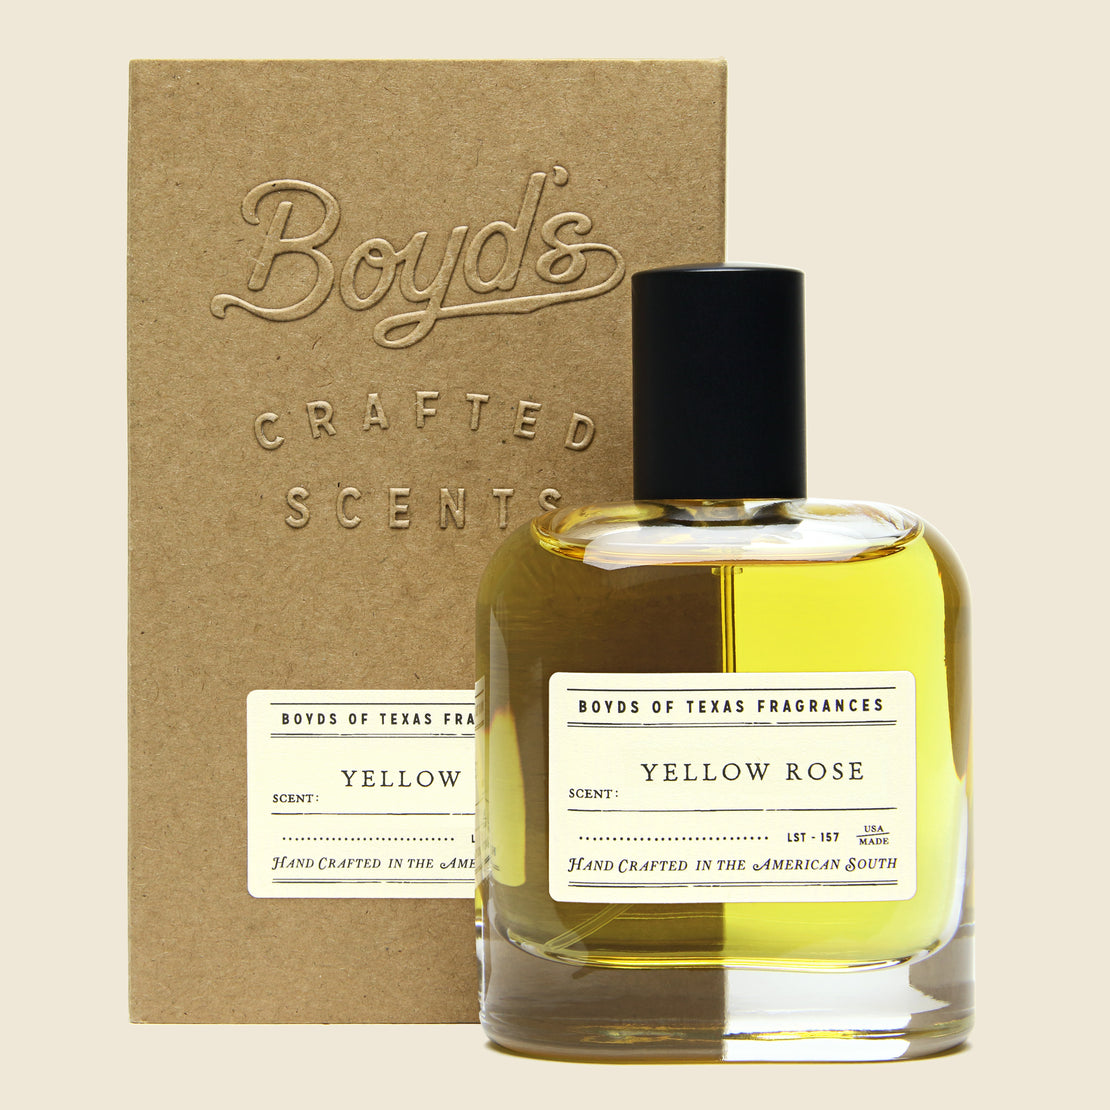 Boyd's of Texas Eau De Parfum - Yellow Rose, 1.7oz